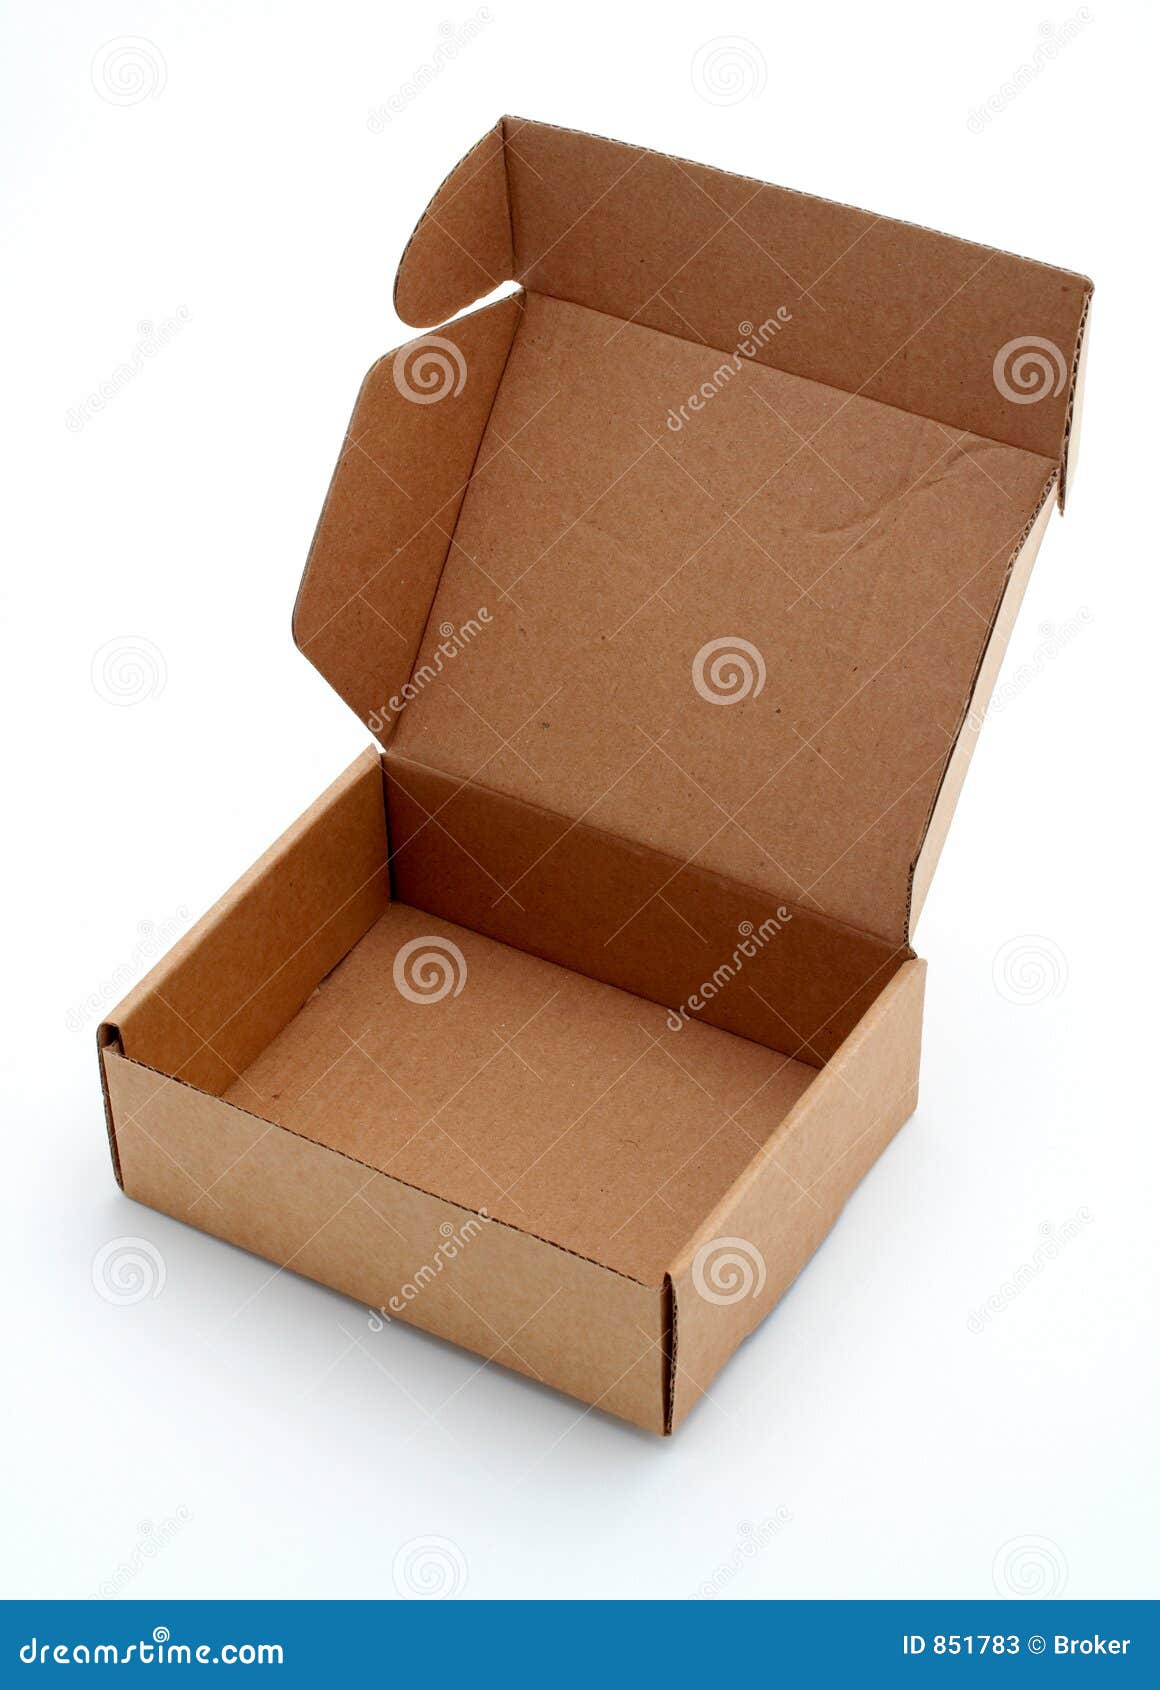 an open cardboard box